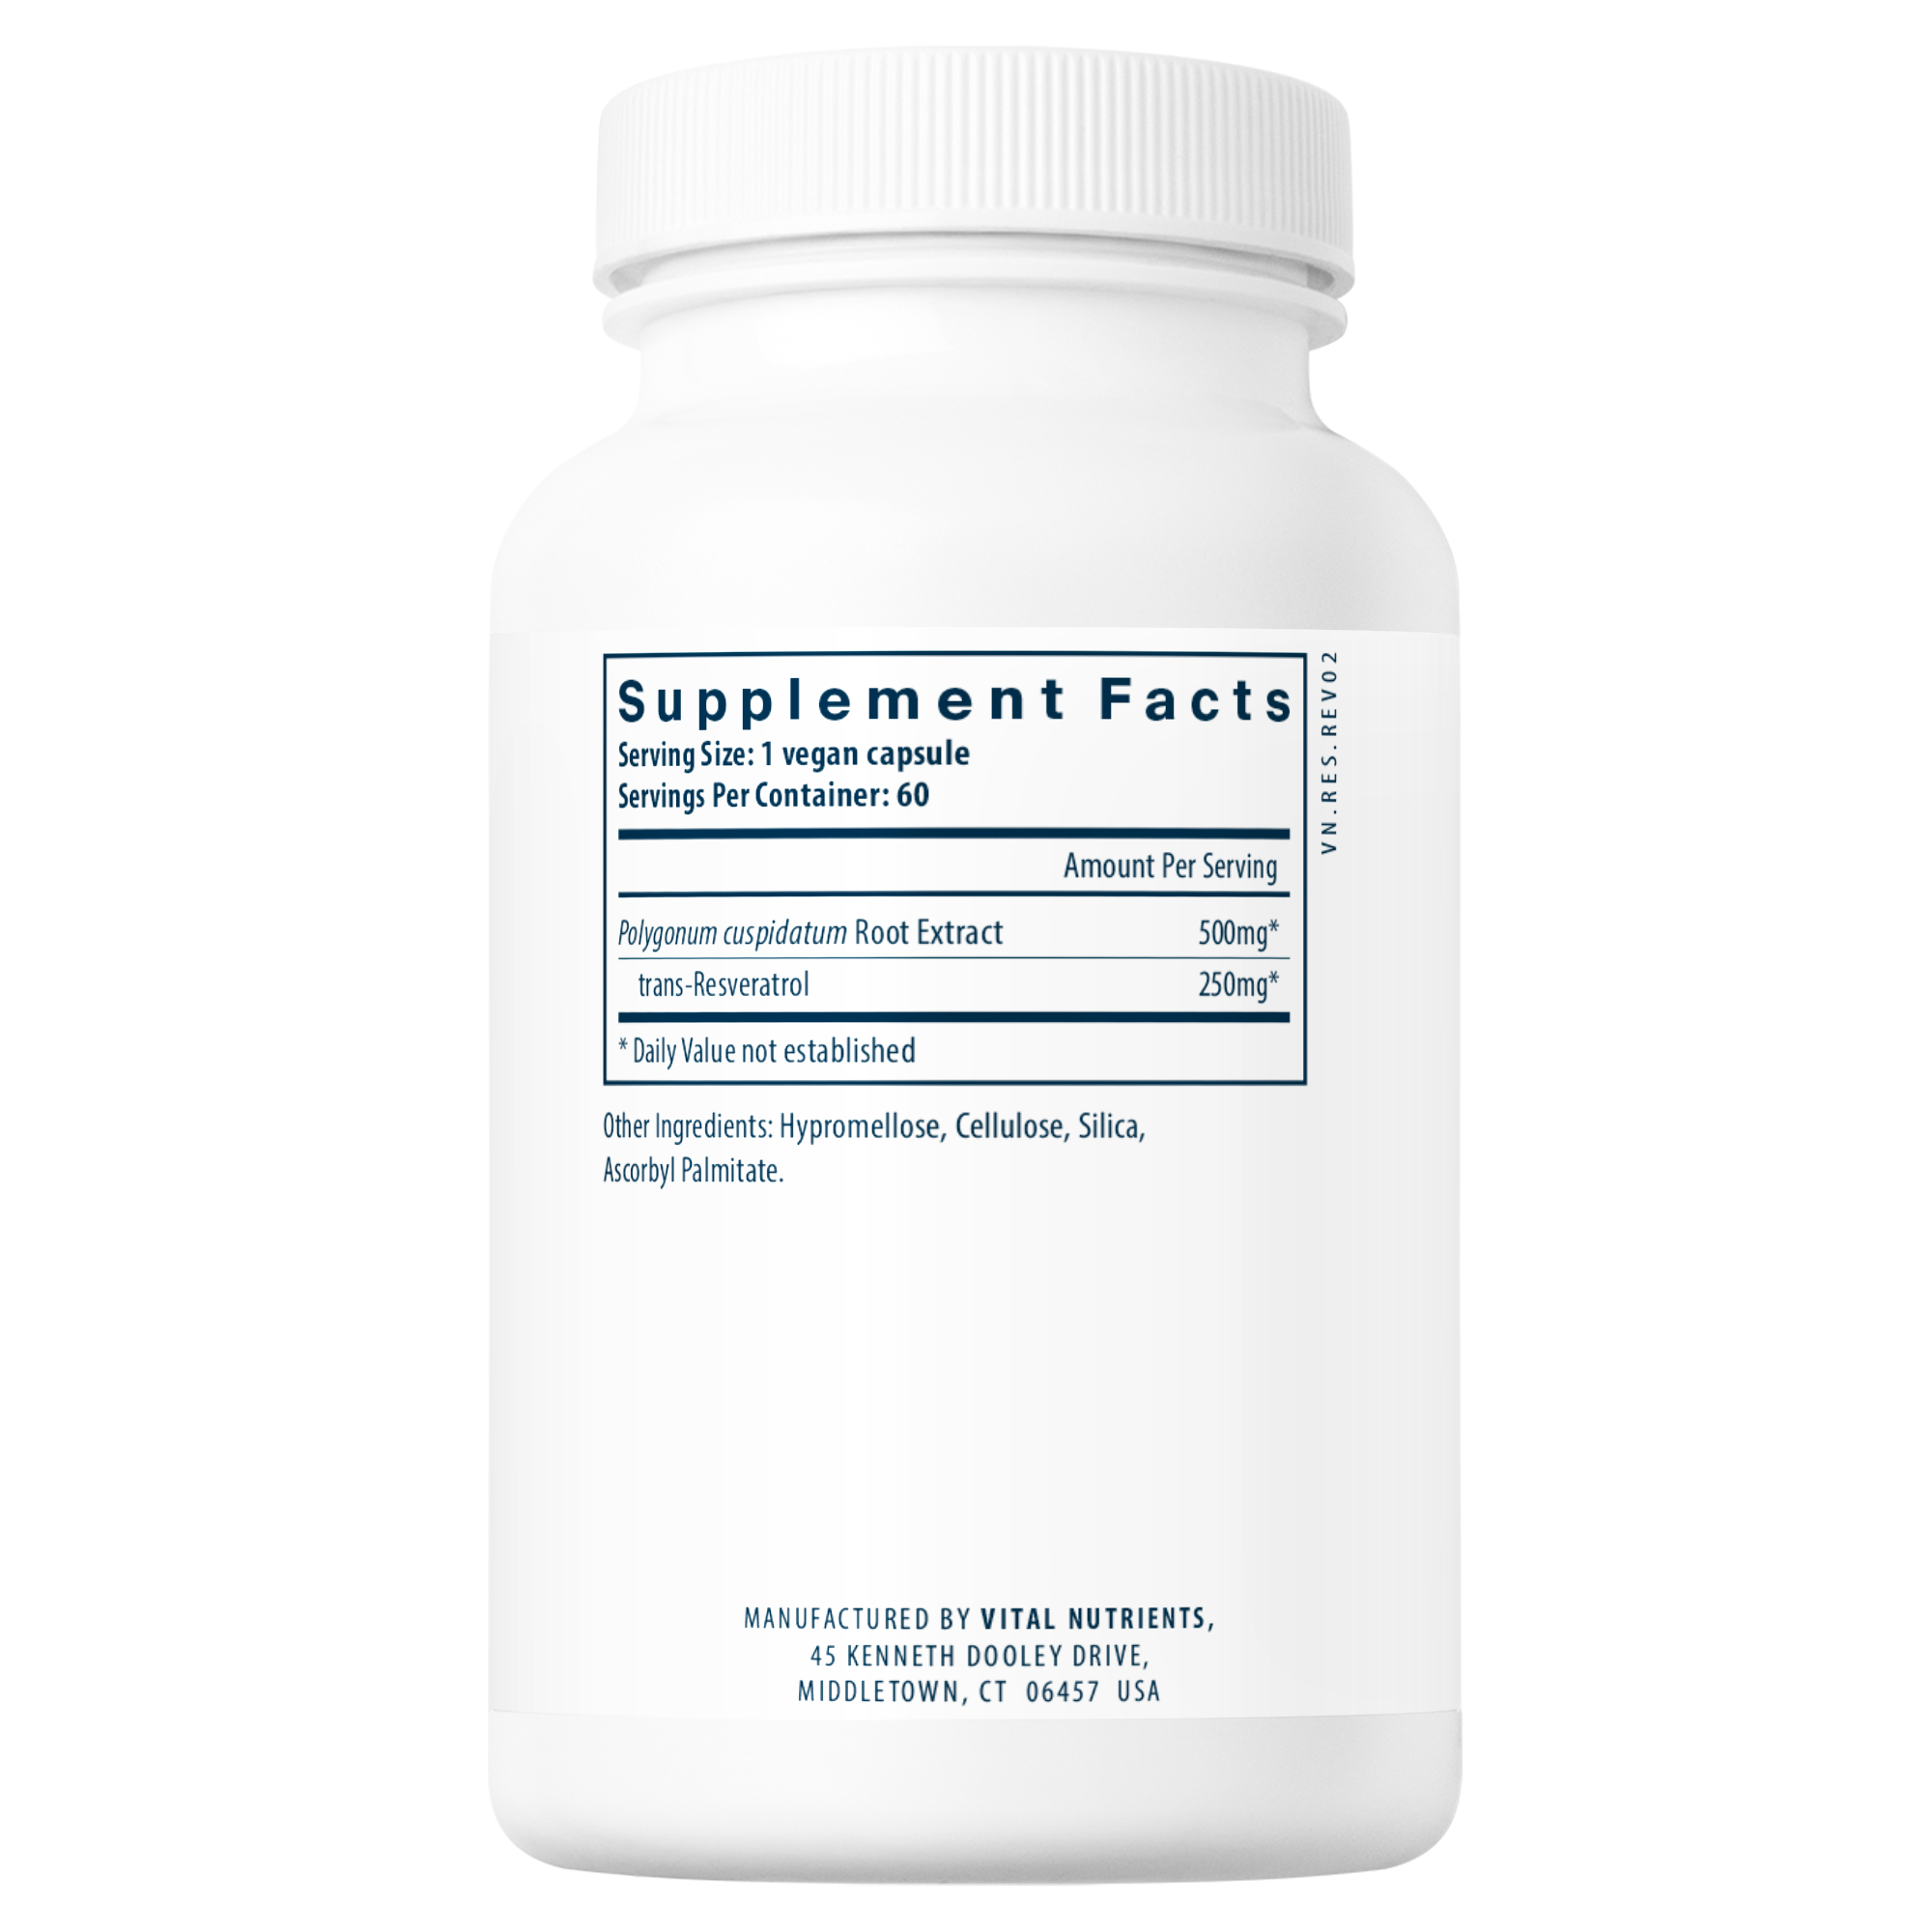 Resveratrol - 60 Capsules | Vital Nutrients